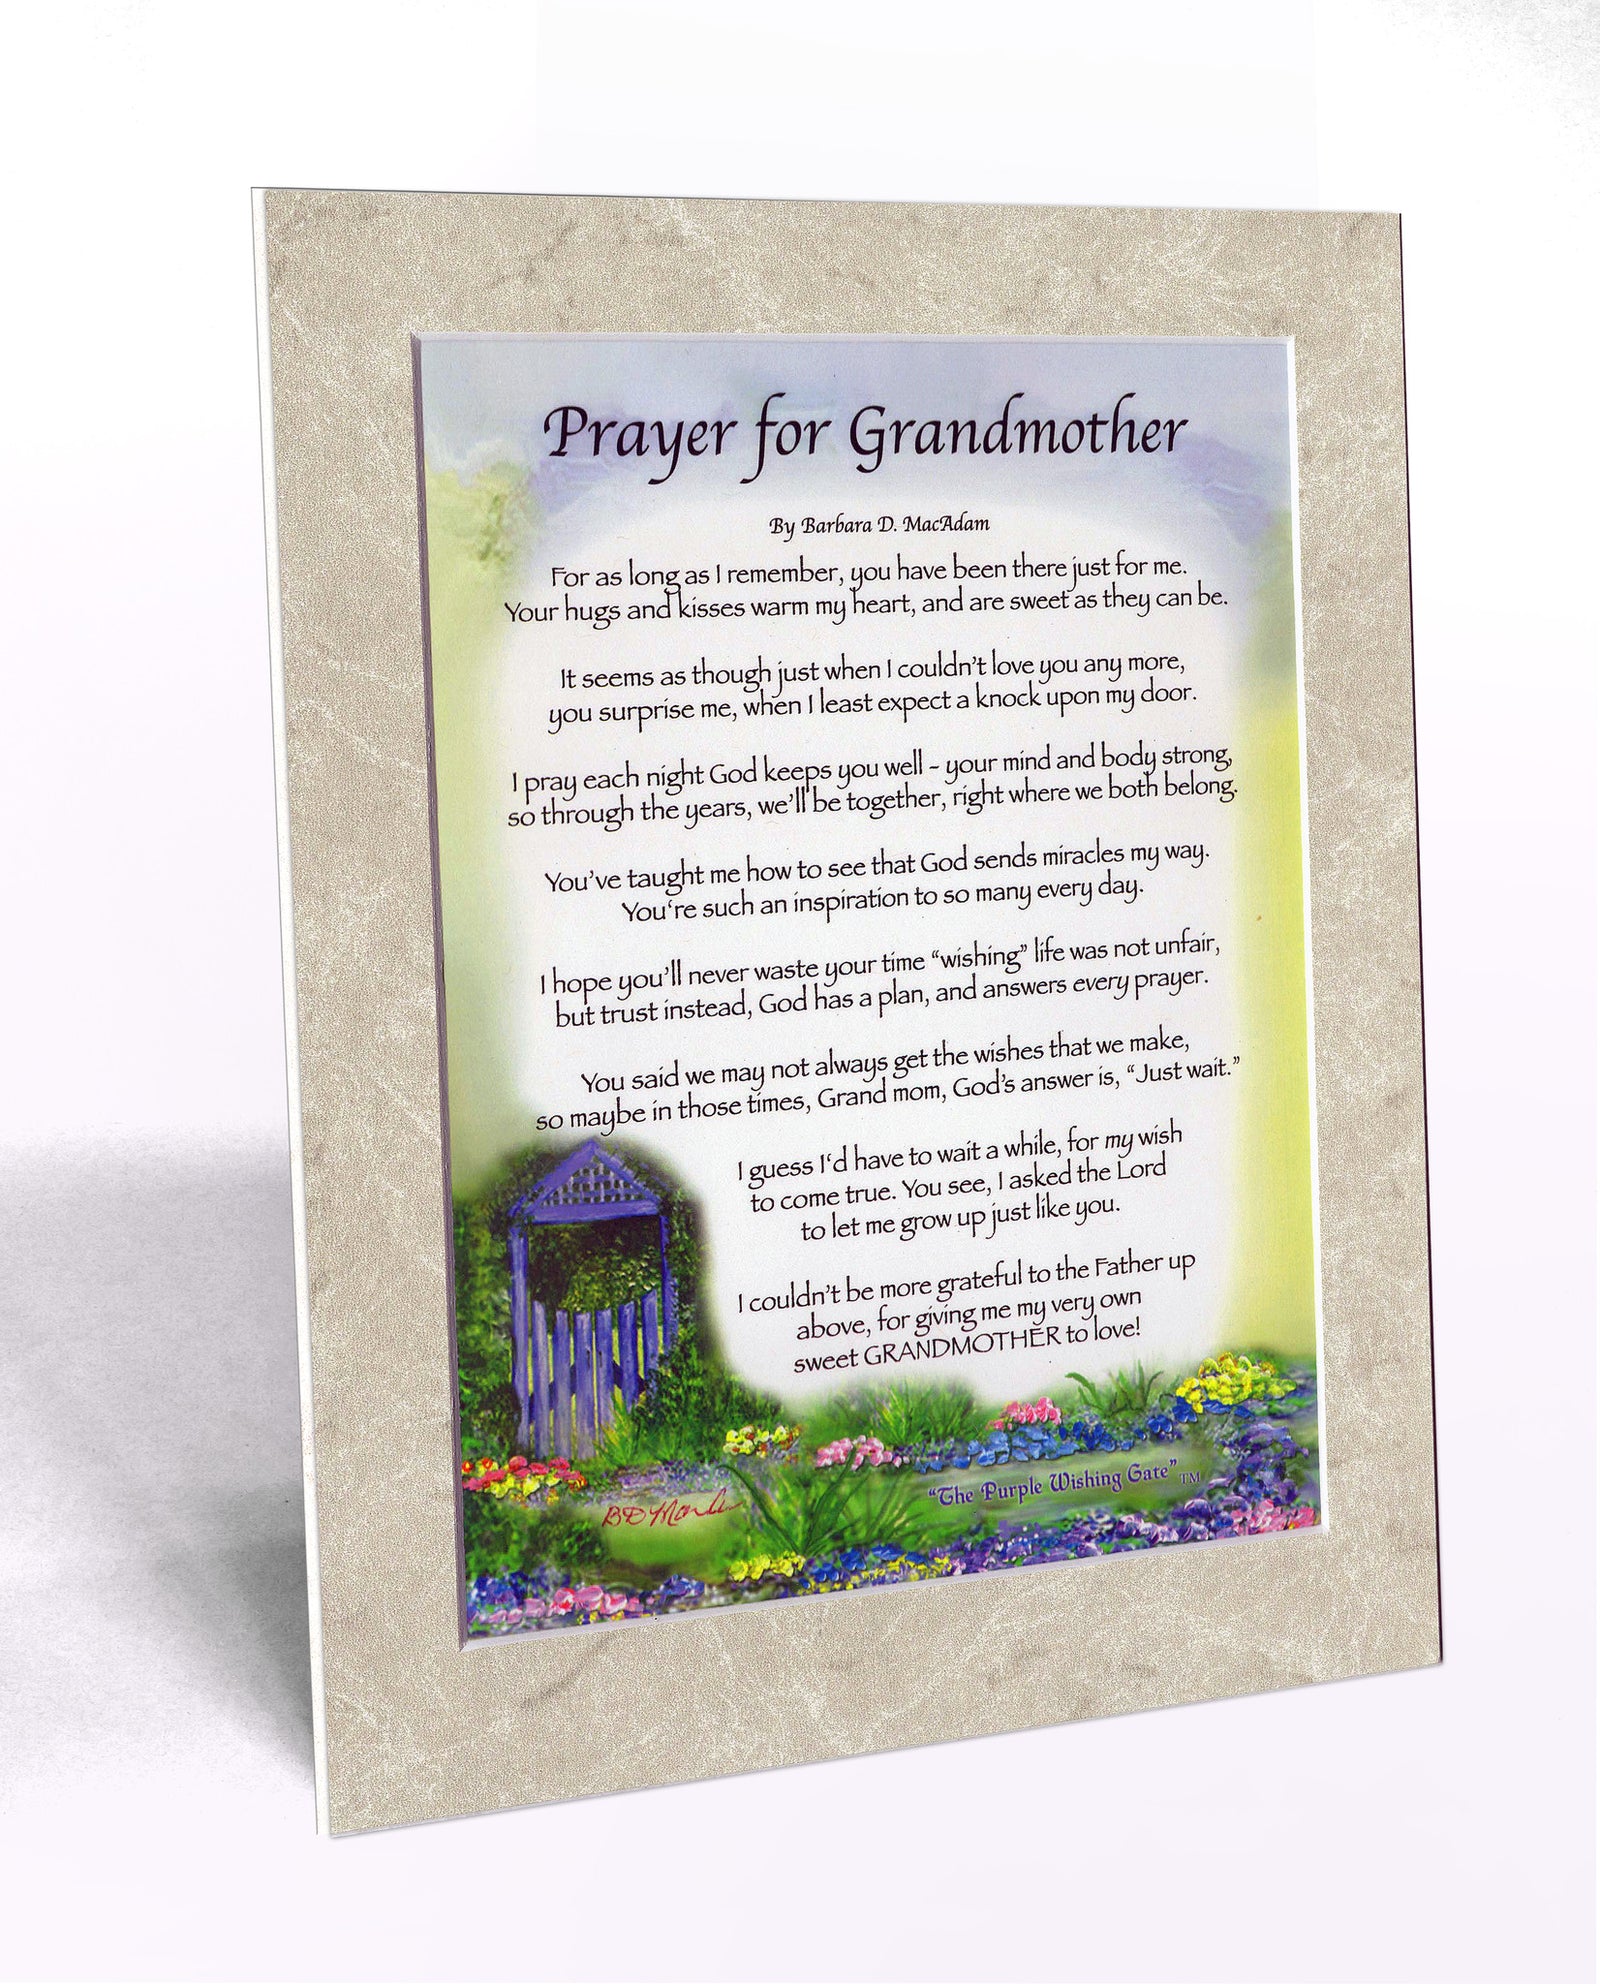 Prayer for Grandmother (8x10) - 8x10 Custom Matted Clearance - PurpleWishingGate.com